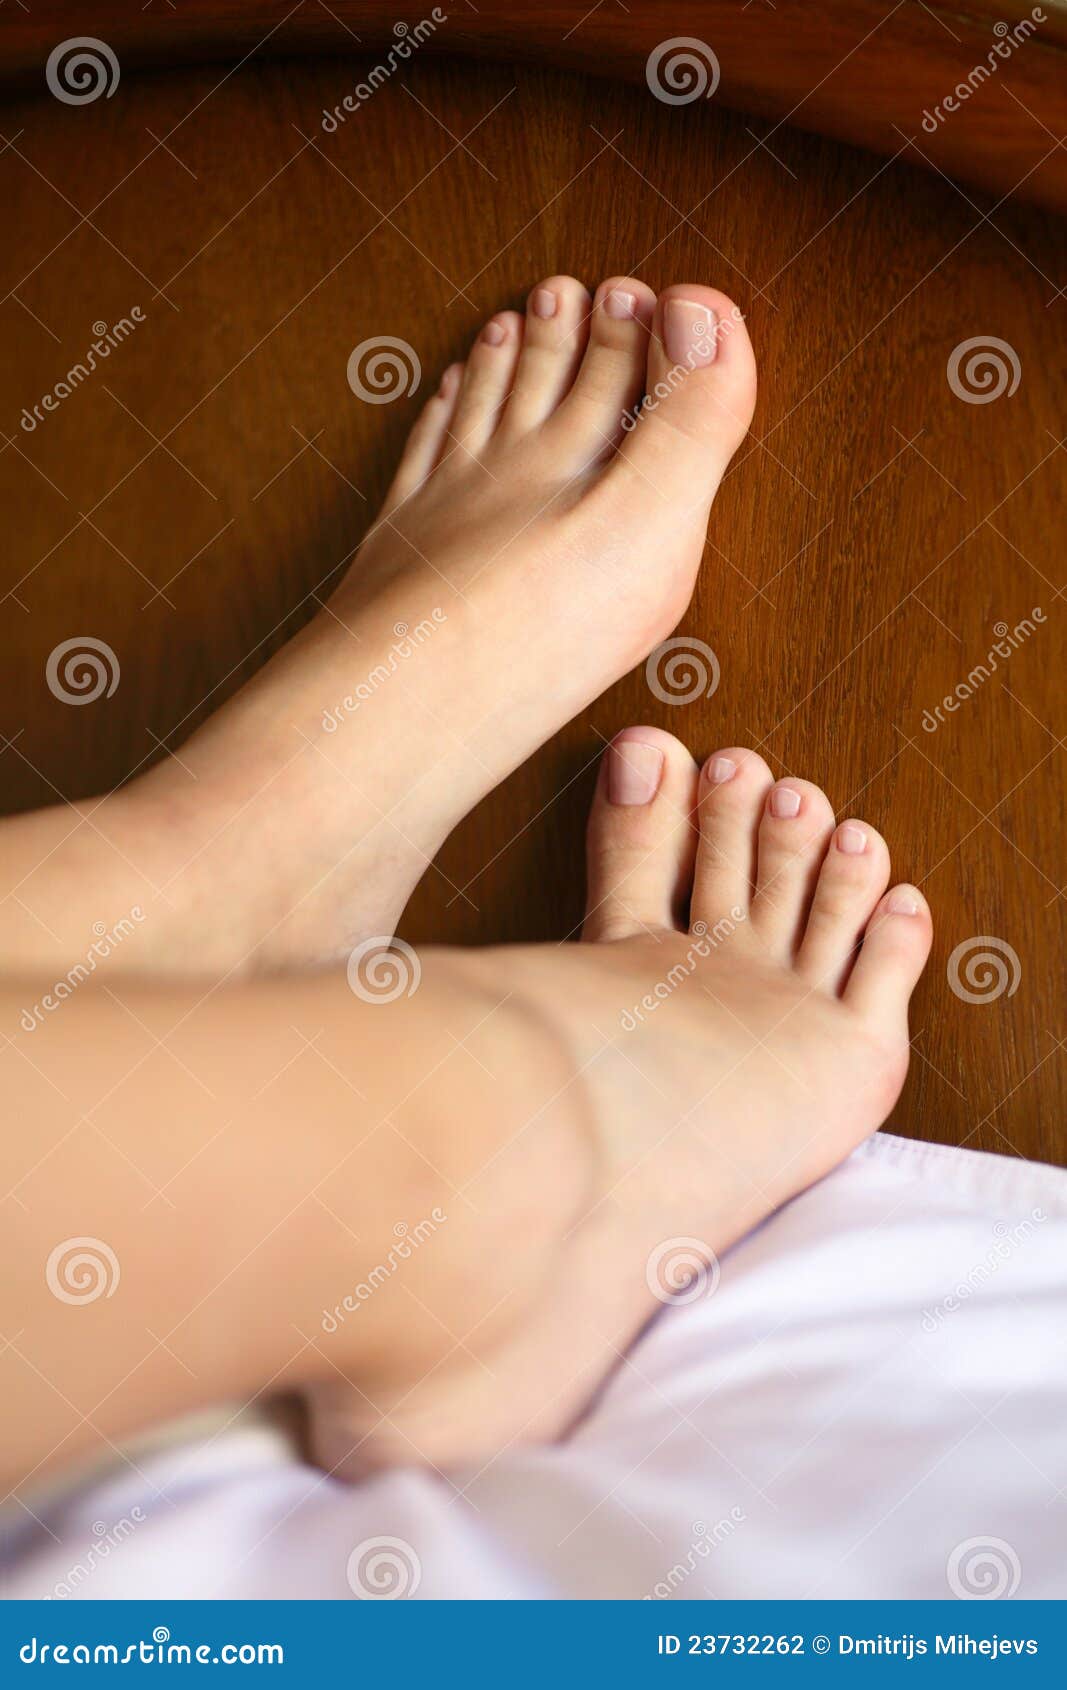 Feet perfect